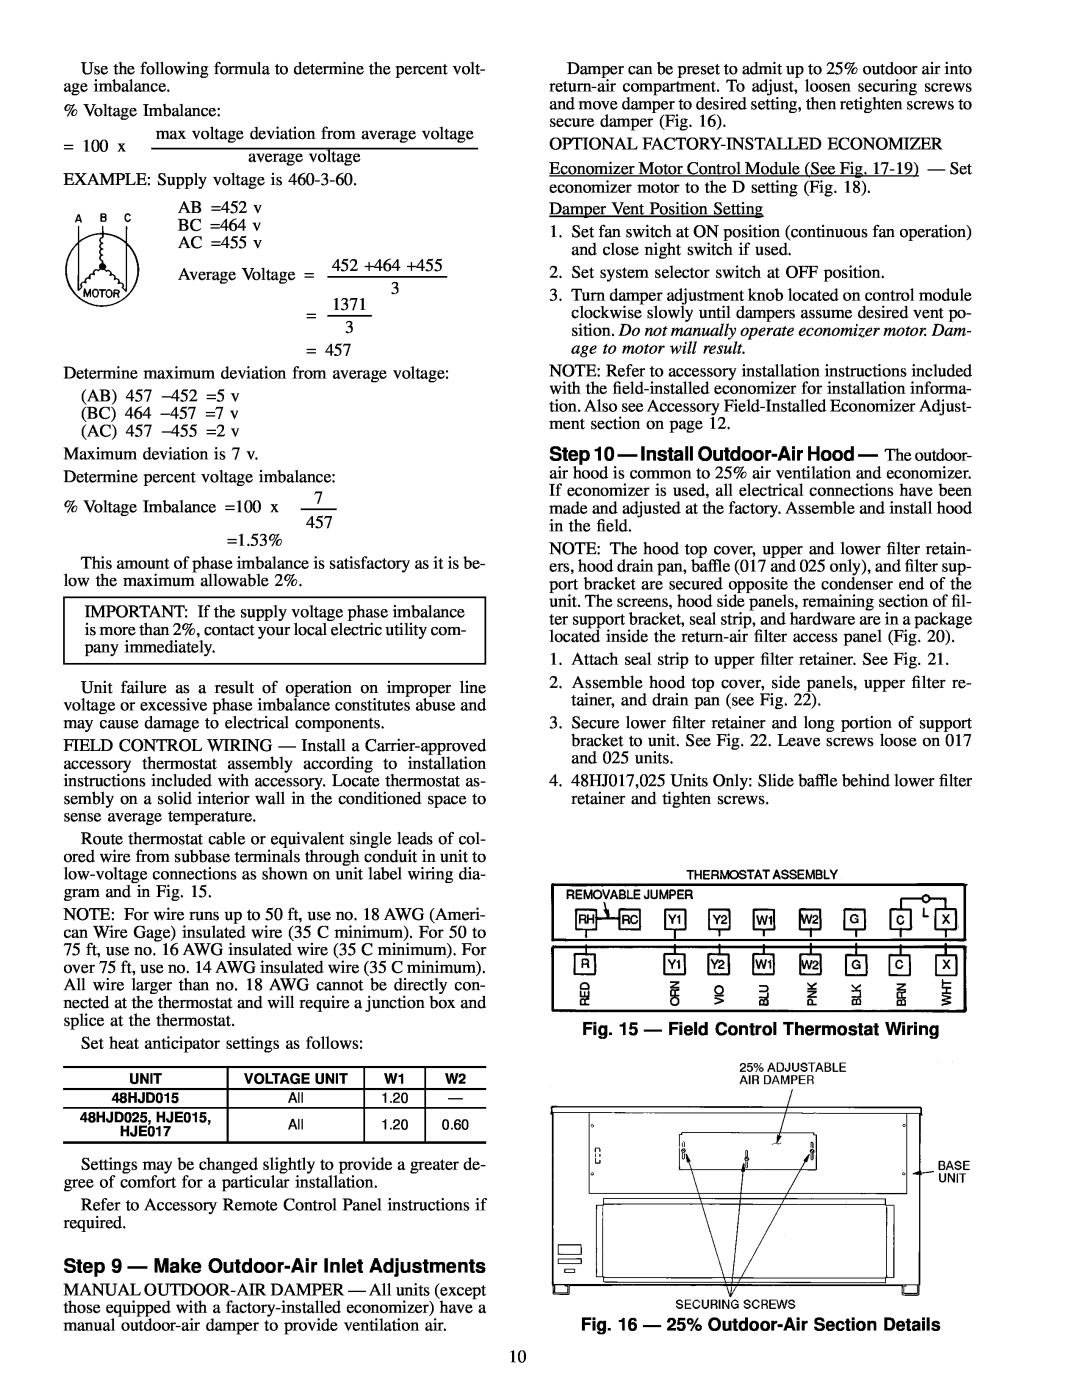 Carrier 48HJ015-025 installation instructions Ð Make Outdoor-AirInlet Adjustments, Ð Field Control Thermostat Wiring 